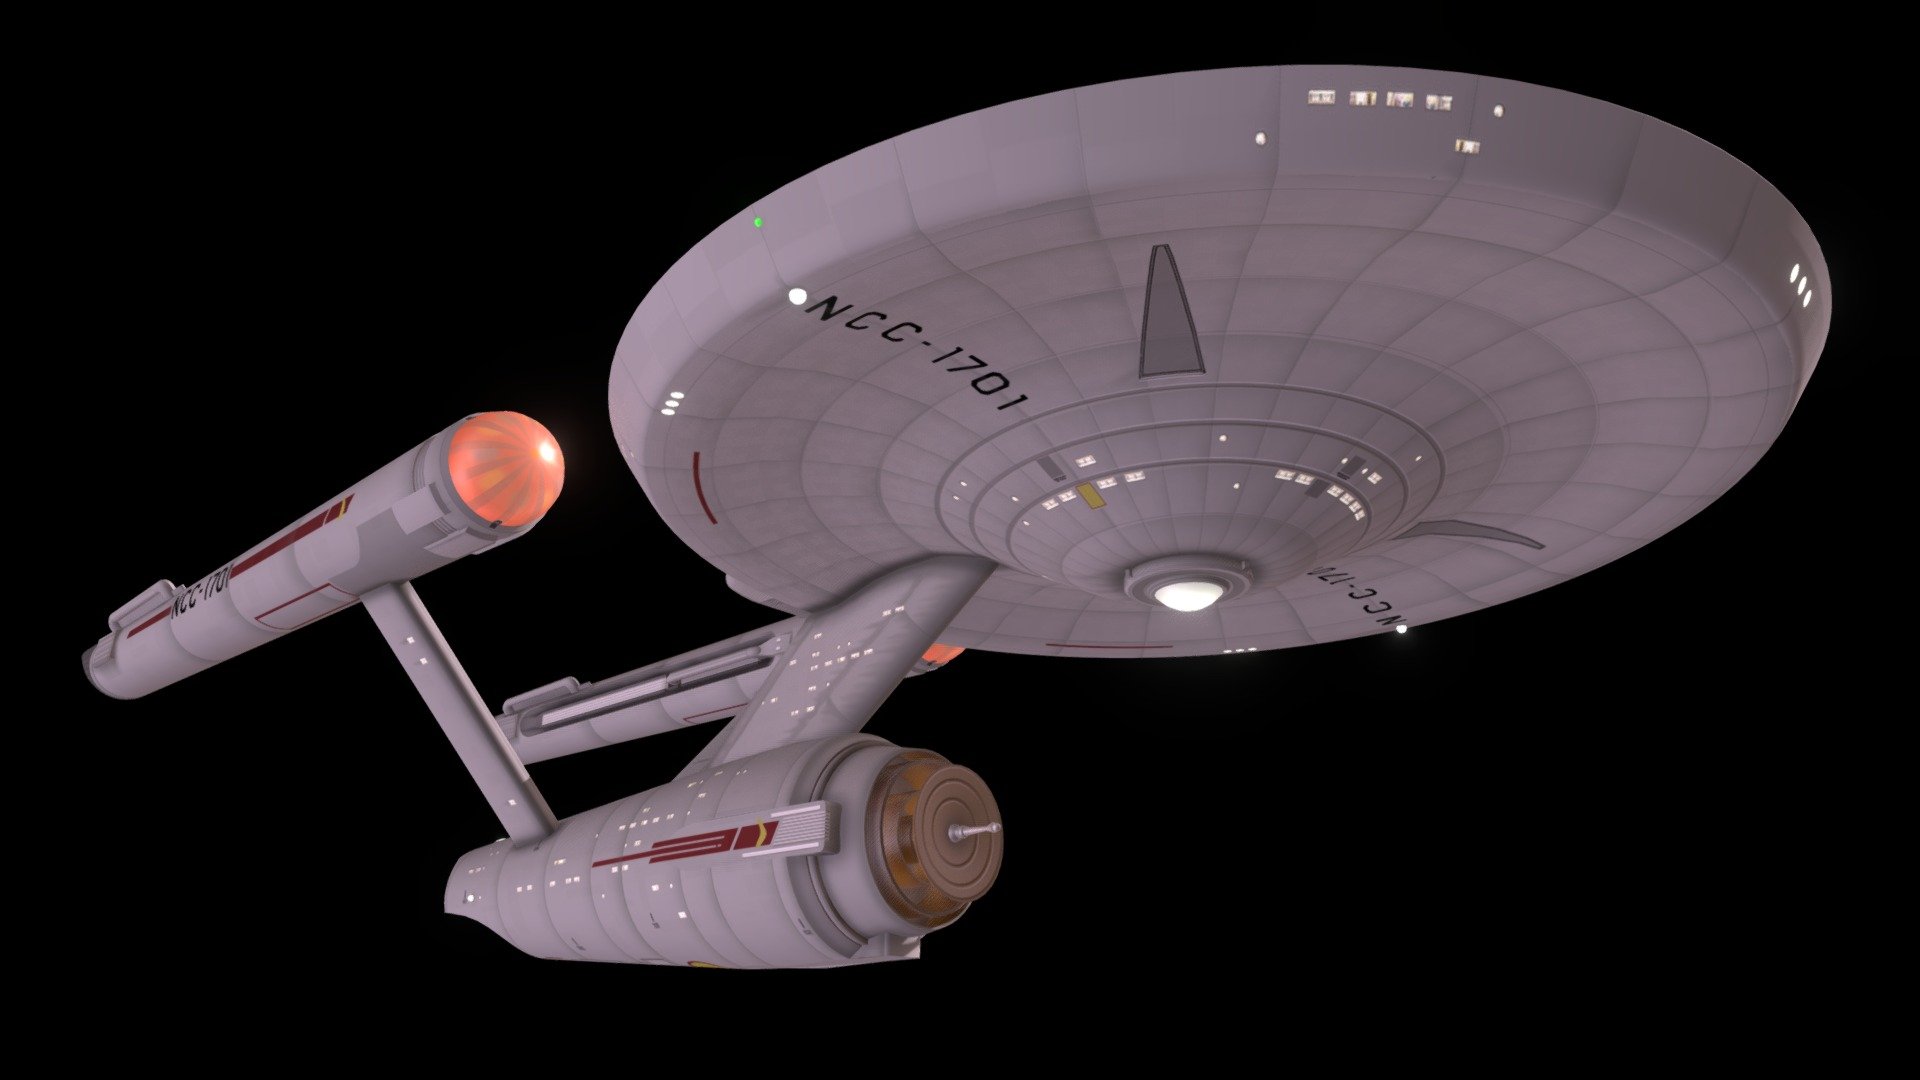 Classic Uss Enterprise From Star Trek Tos 3d Model By Major Stress